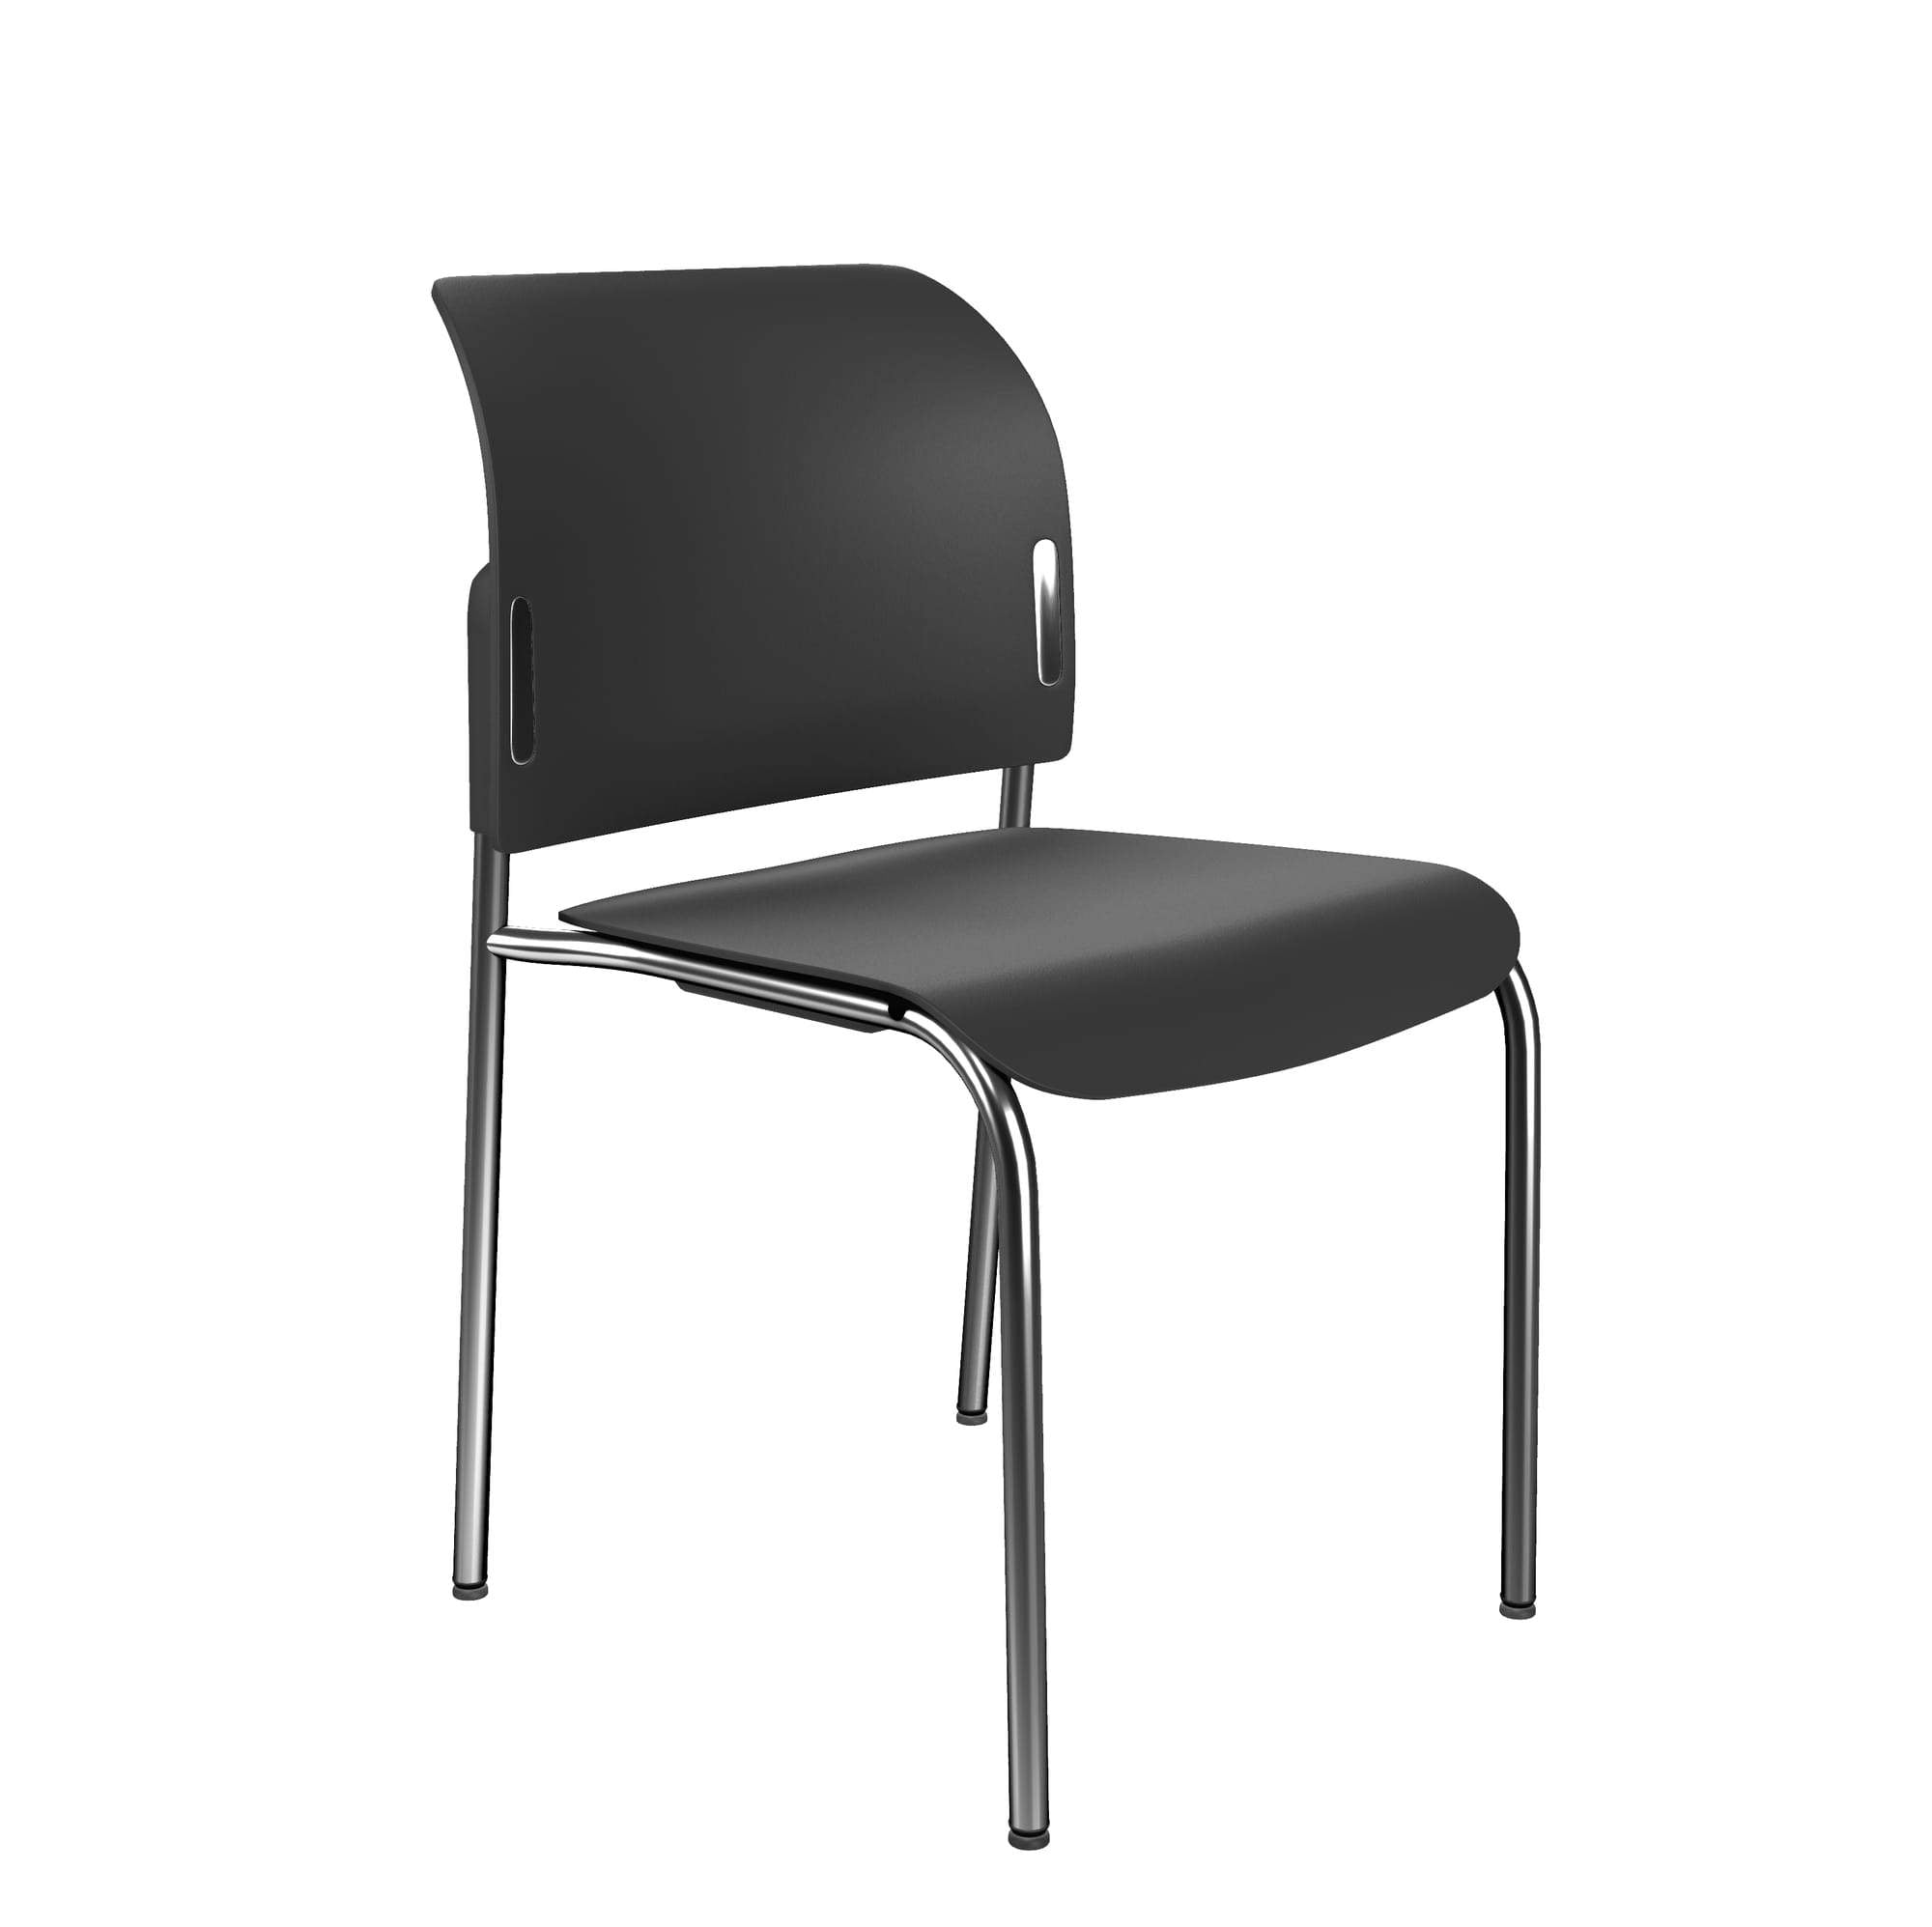 Bit Plastic Seat and Backrest Chair, 4-Legged Frame - Model 550H